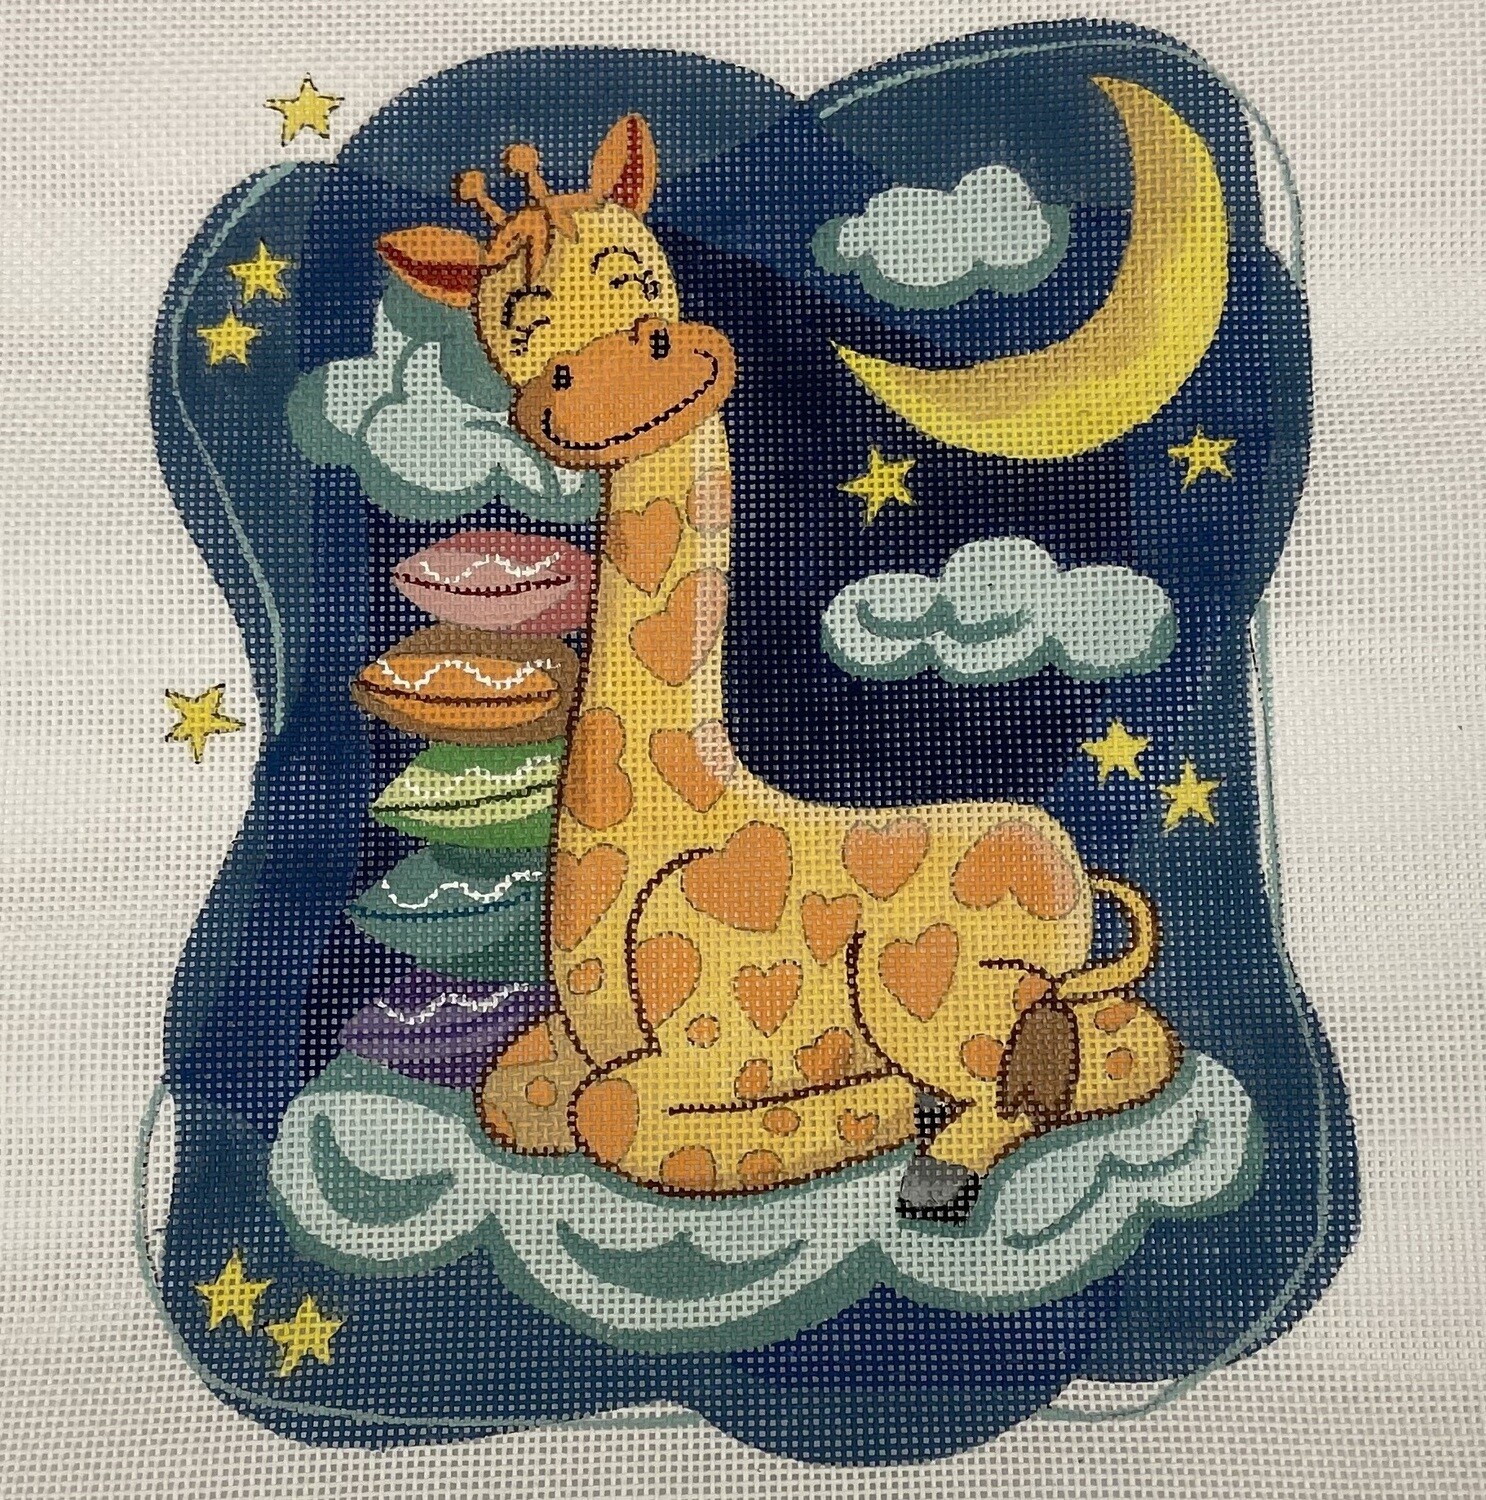 Sleeping Giraffe (Handpainted by Alice Peterson)